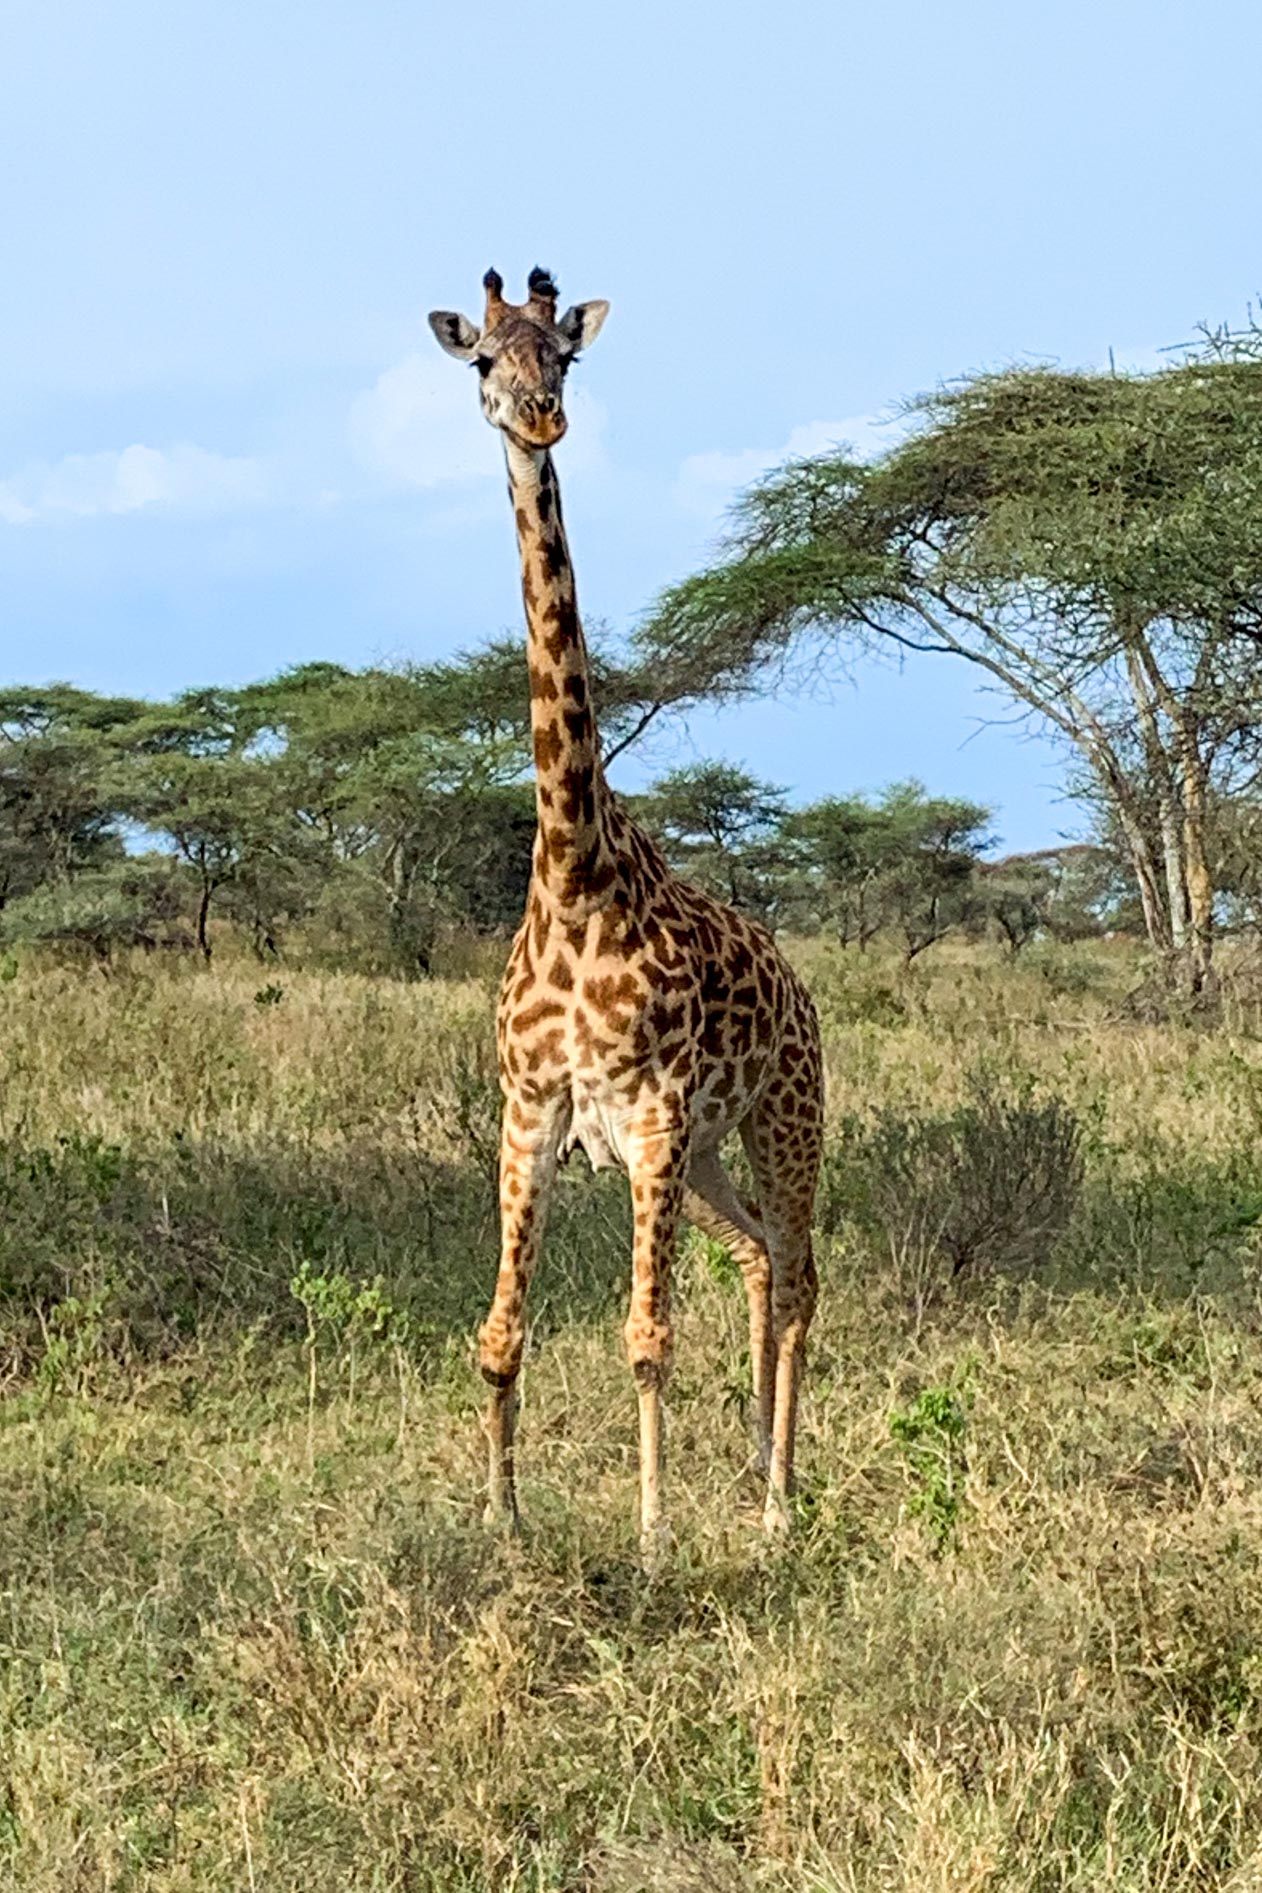 Foresight Ecolodge & Safari – Giraffe in Serengeti